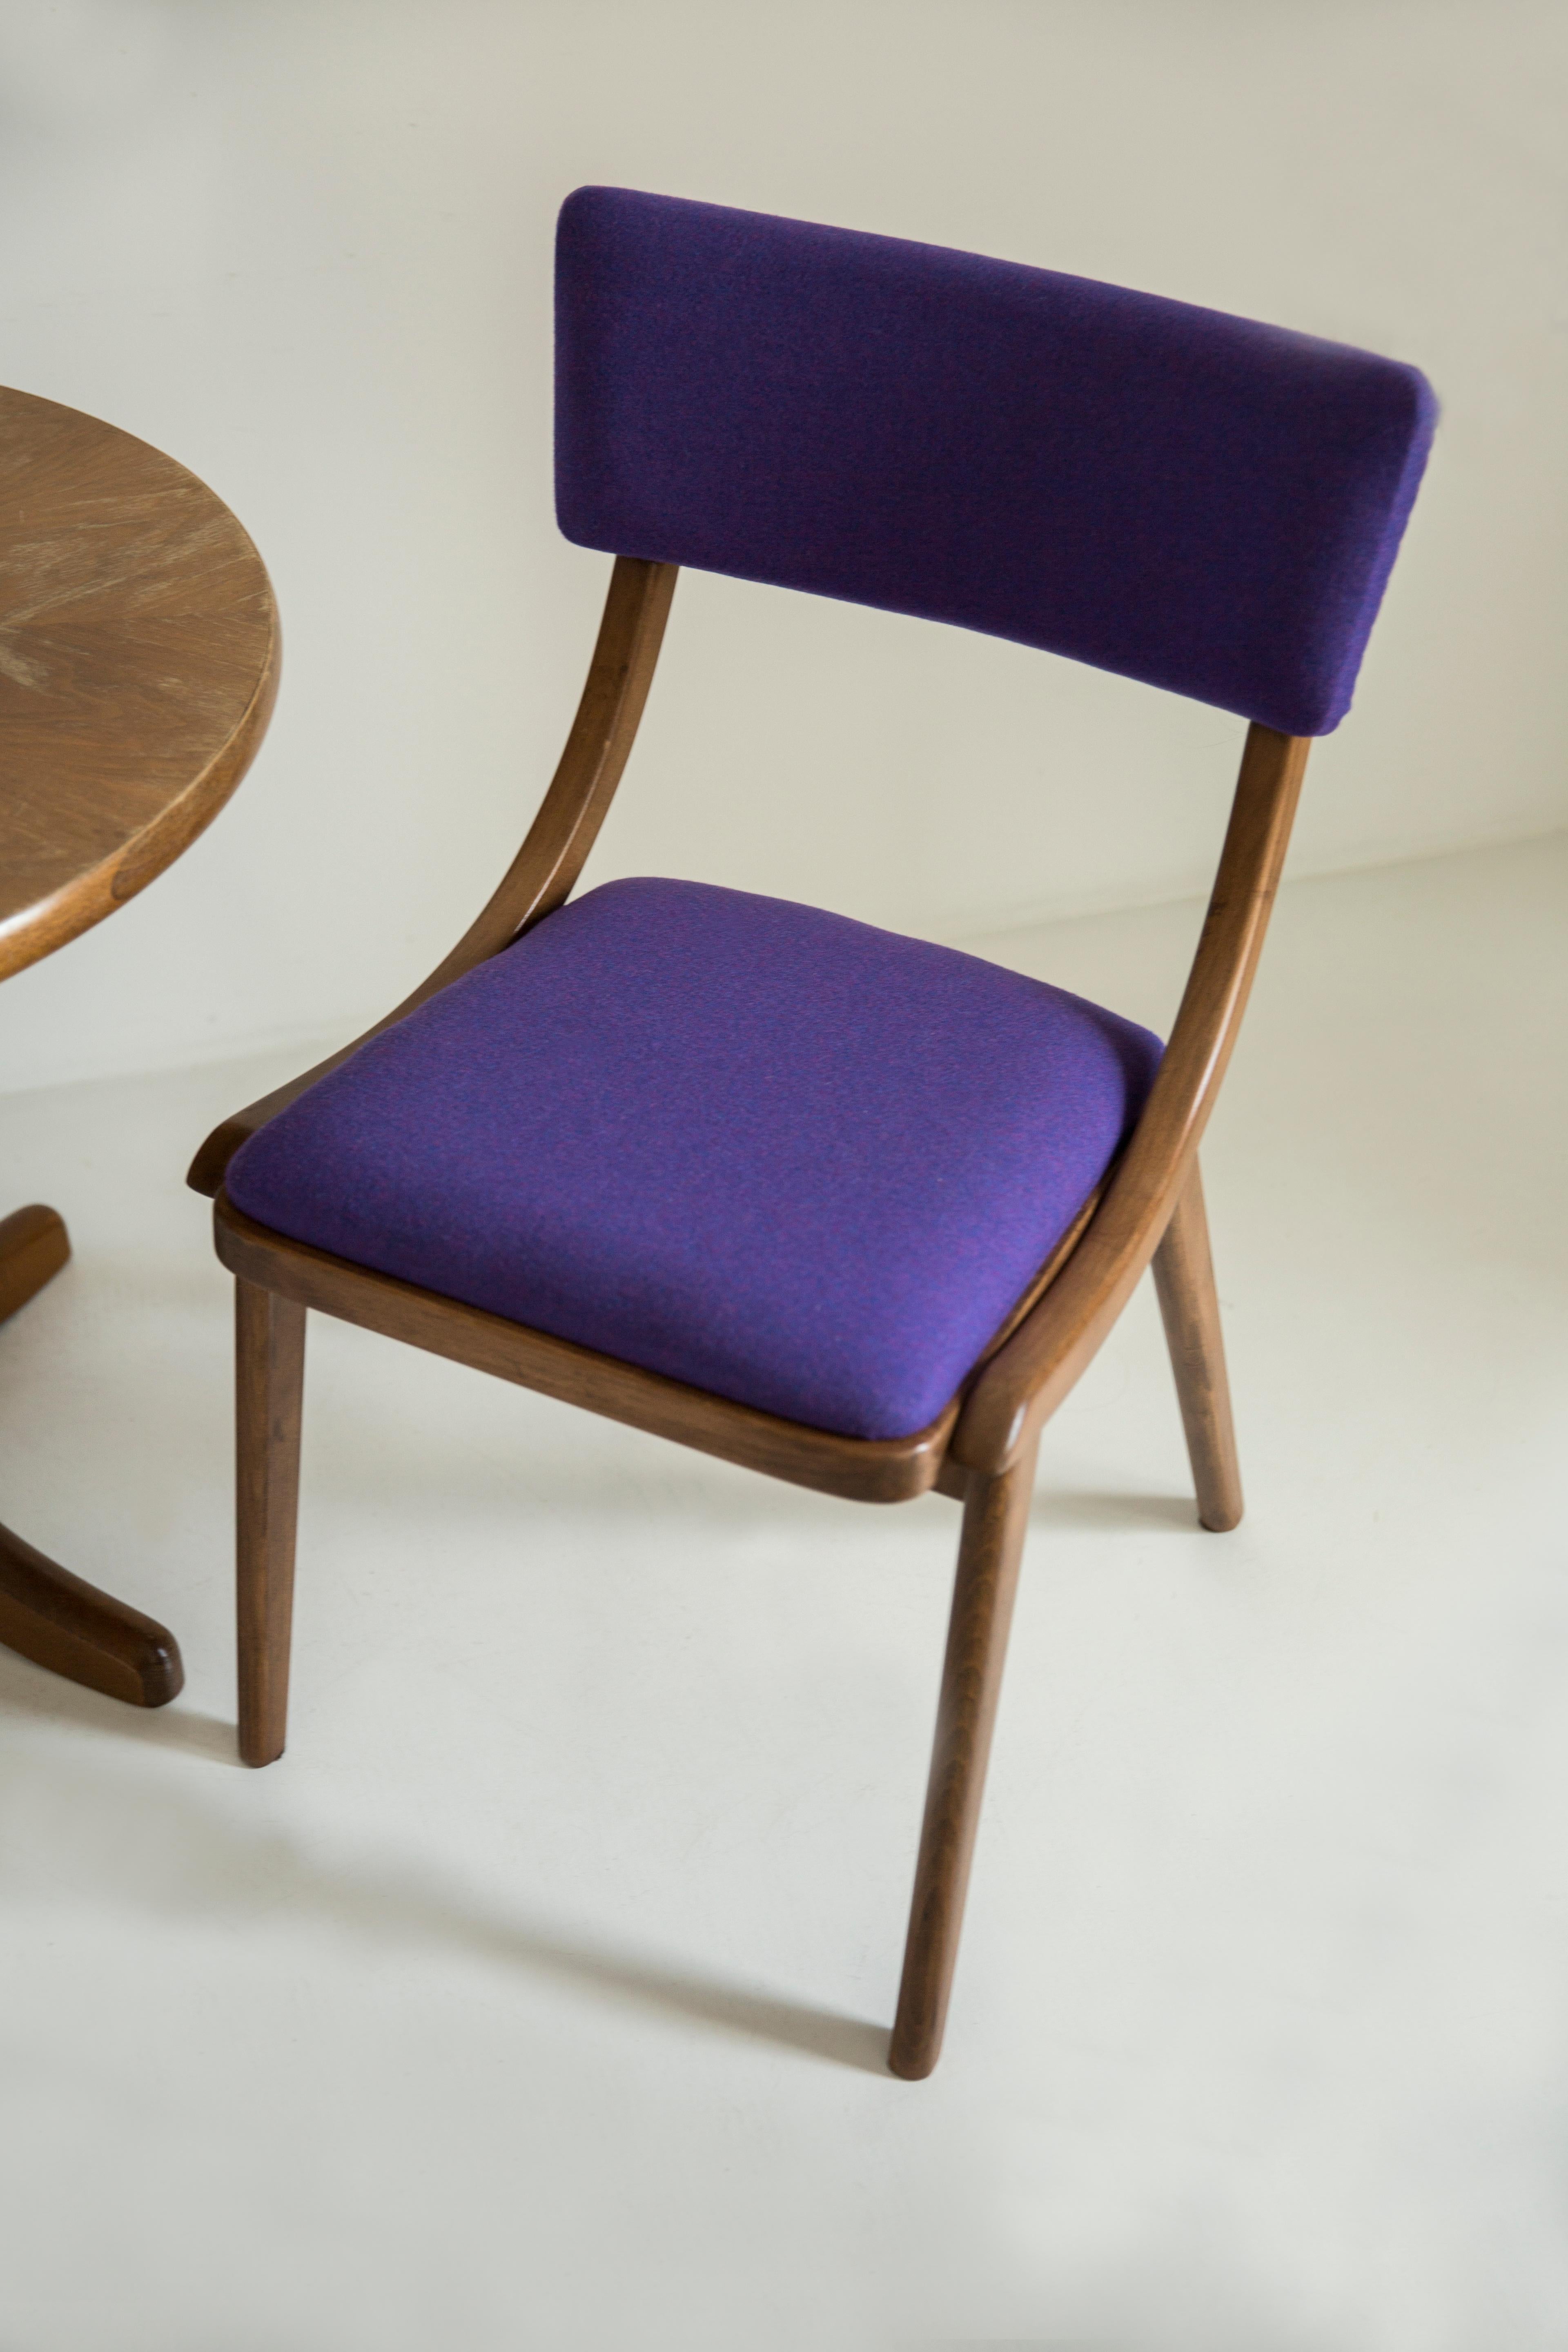 Polish Six Mid Century Modern Bumerang Chairs, Purple Violet Wool, Poland, 1960s For Sale